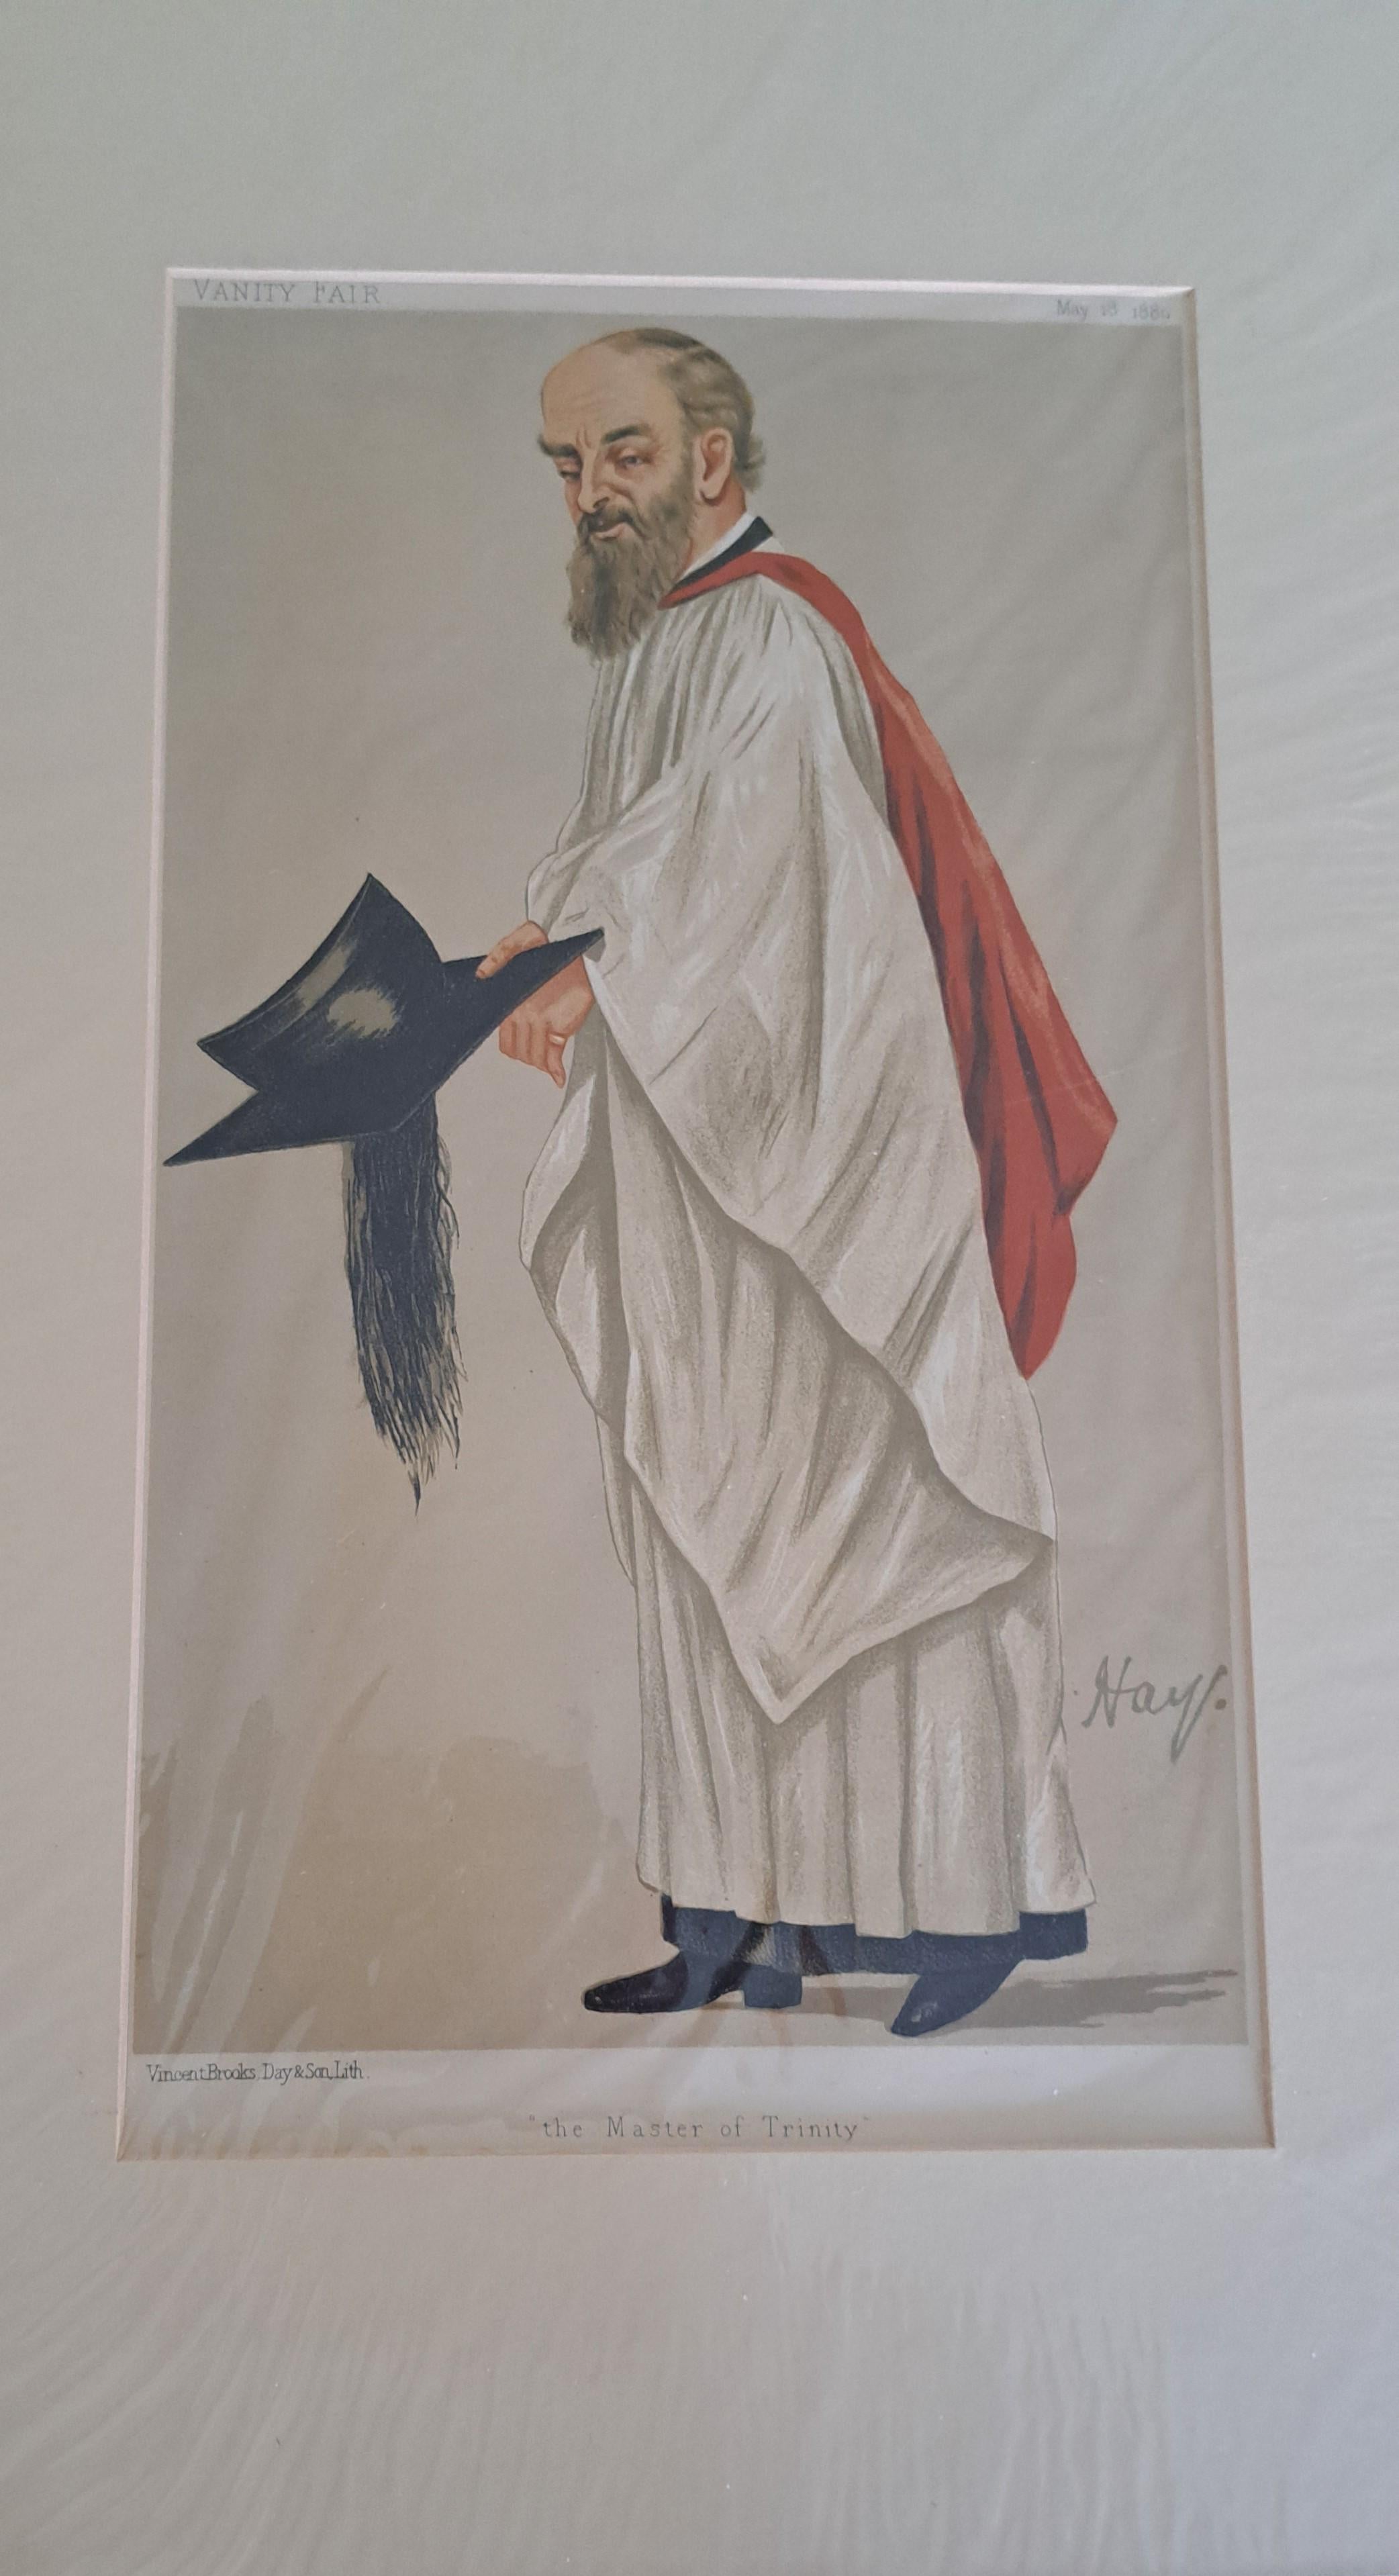 Vanity Fair Print, Männer des Tages rev montague butler (Grau), Portrait Print, von Unknown